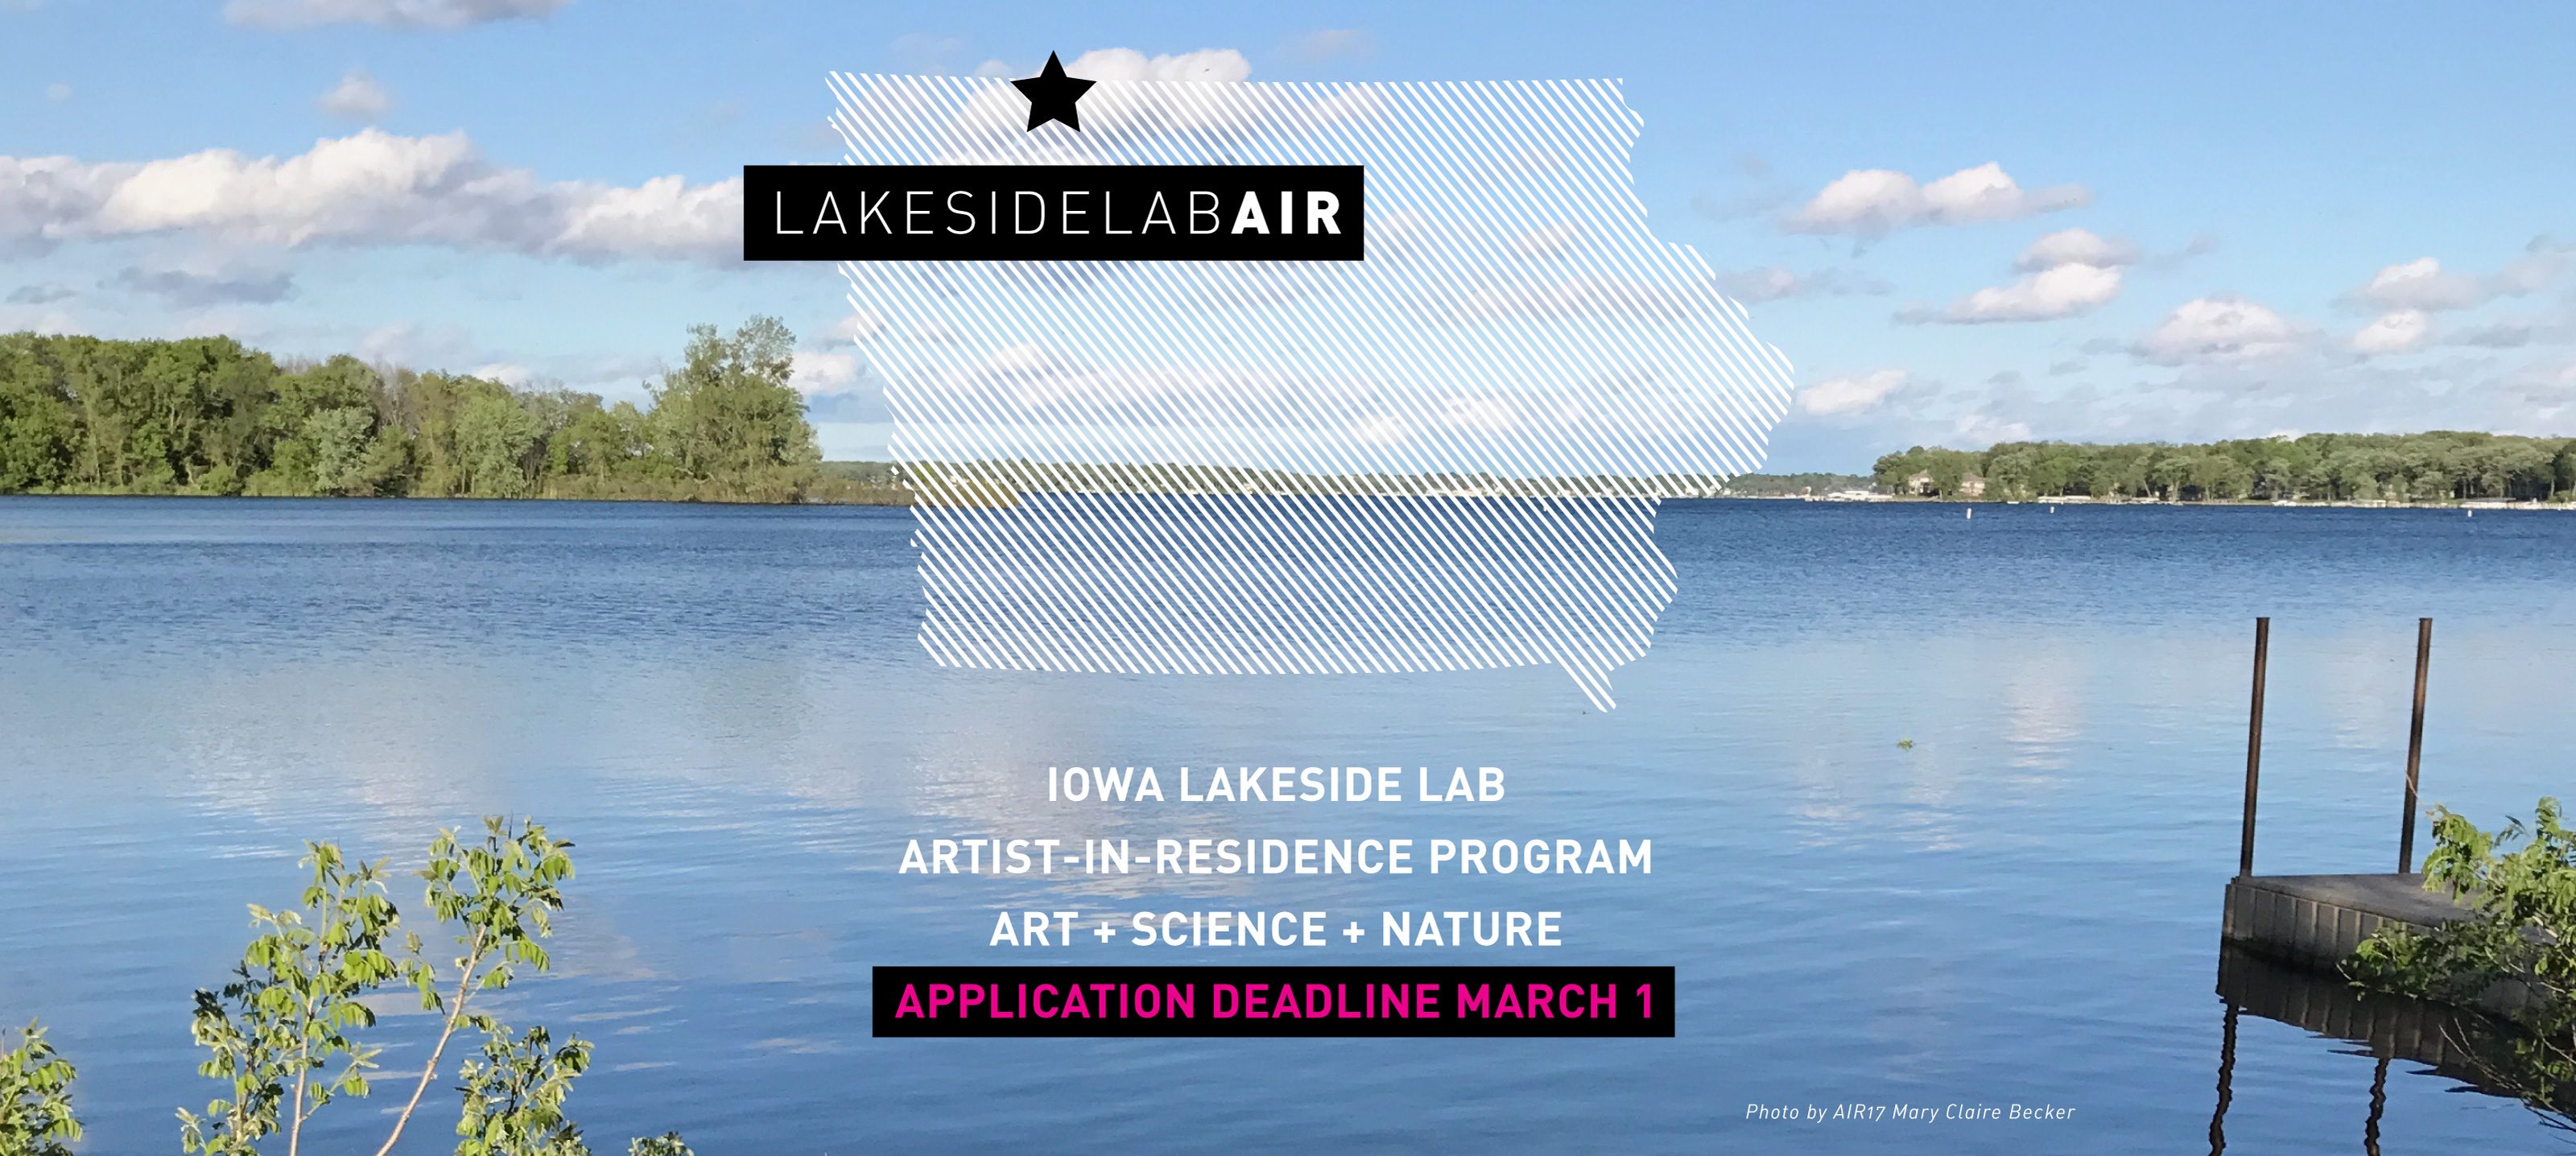 Iowa Lakeside Lab Artist-in-Residence Program – Application Now Open